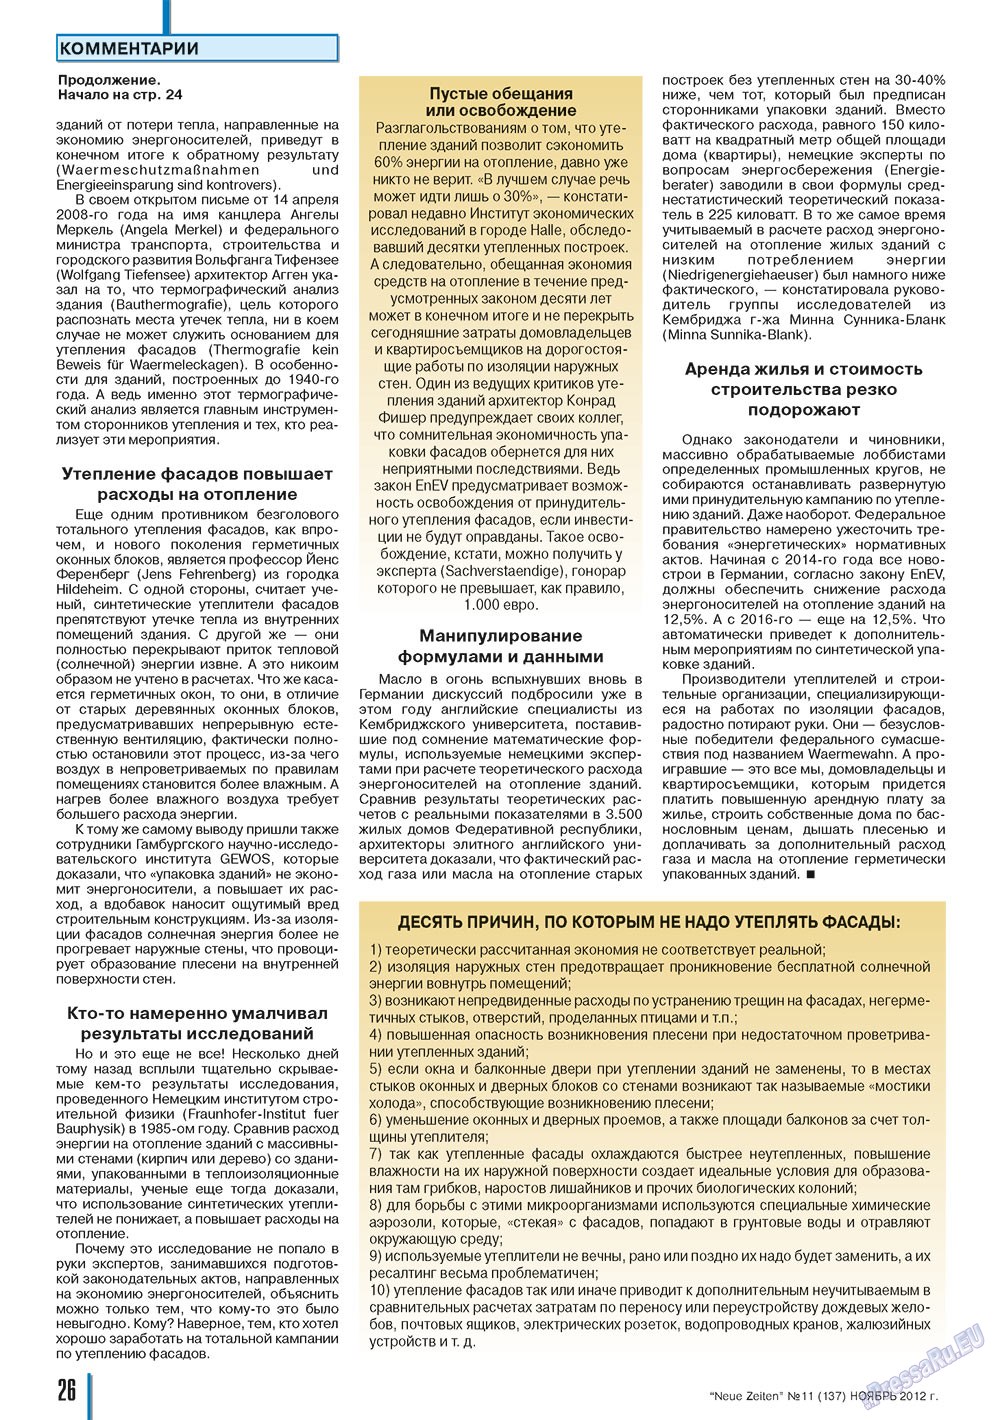 Neue Zeiten (журнал). 2012 год, номер 11, стр. 26